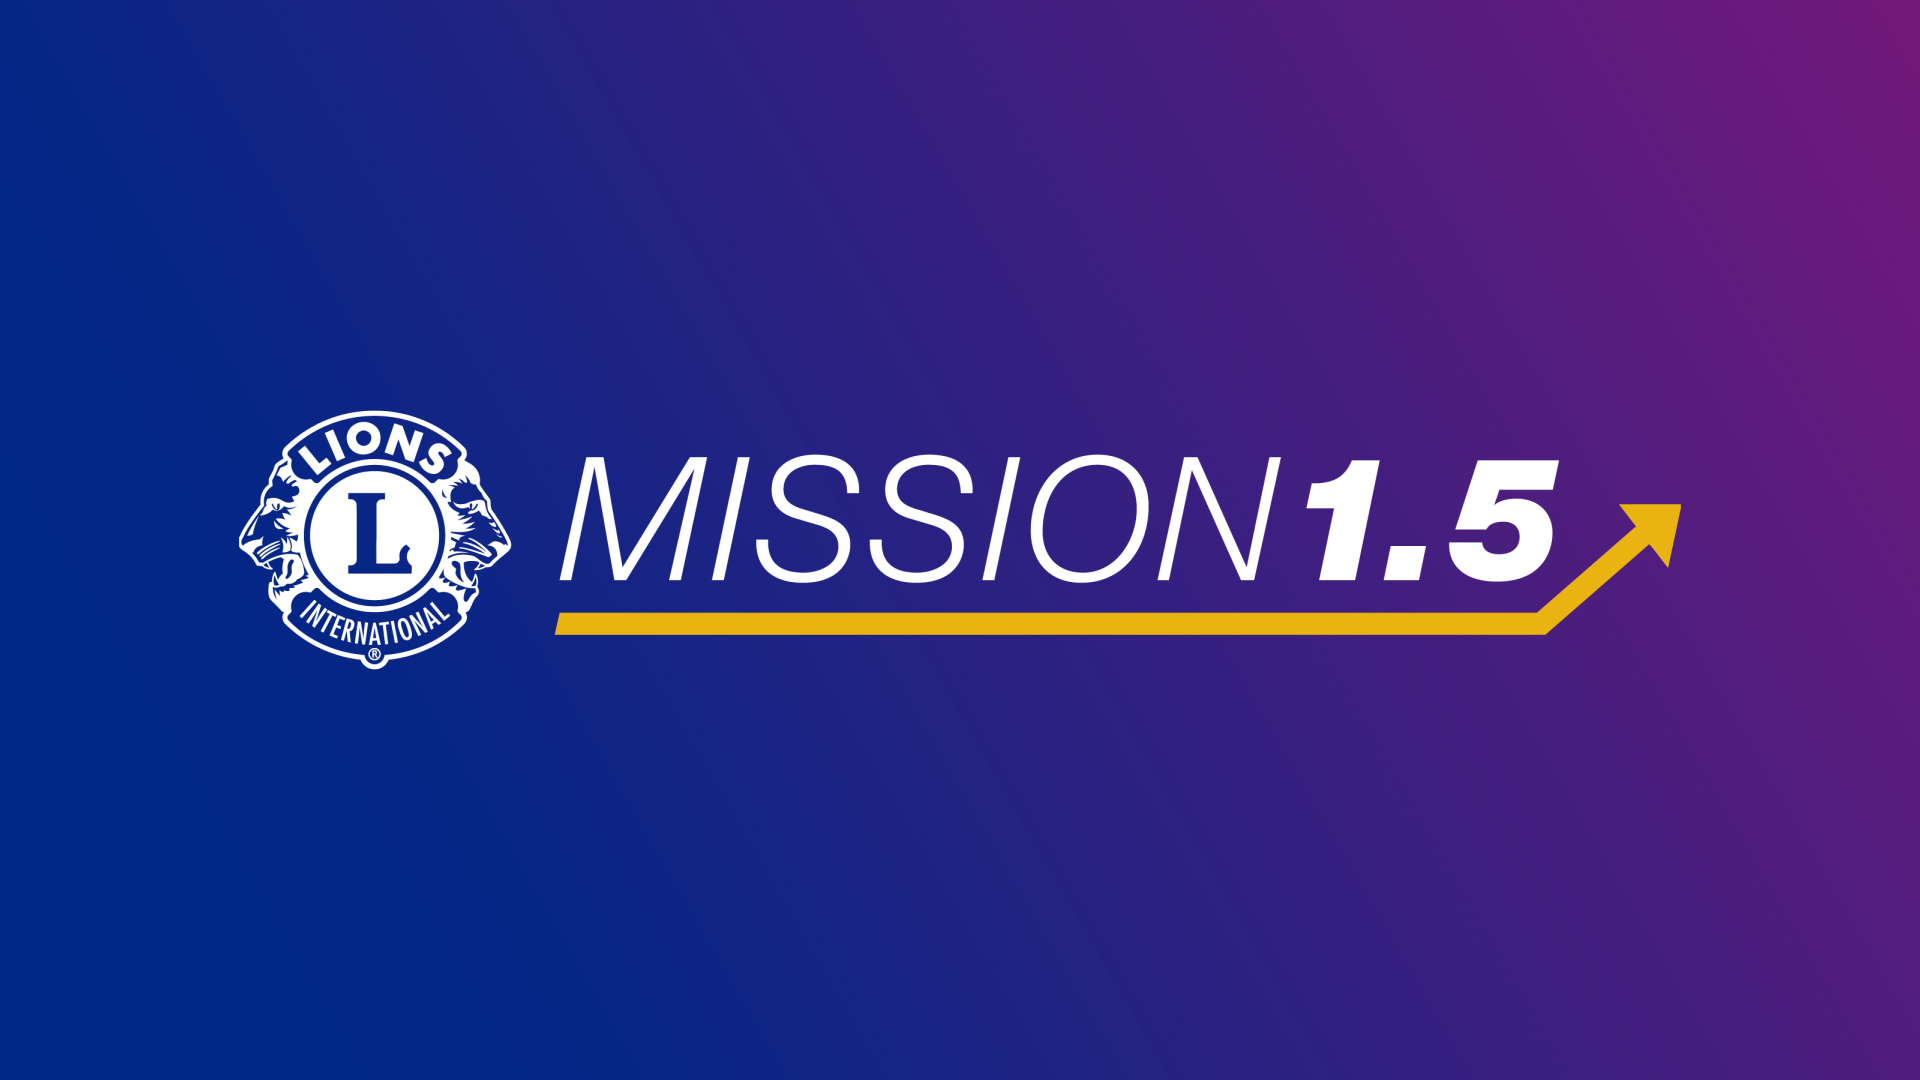 MISSION 1.5 logo